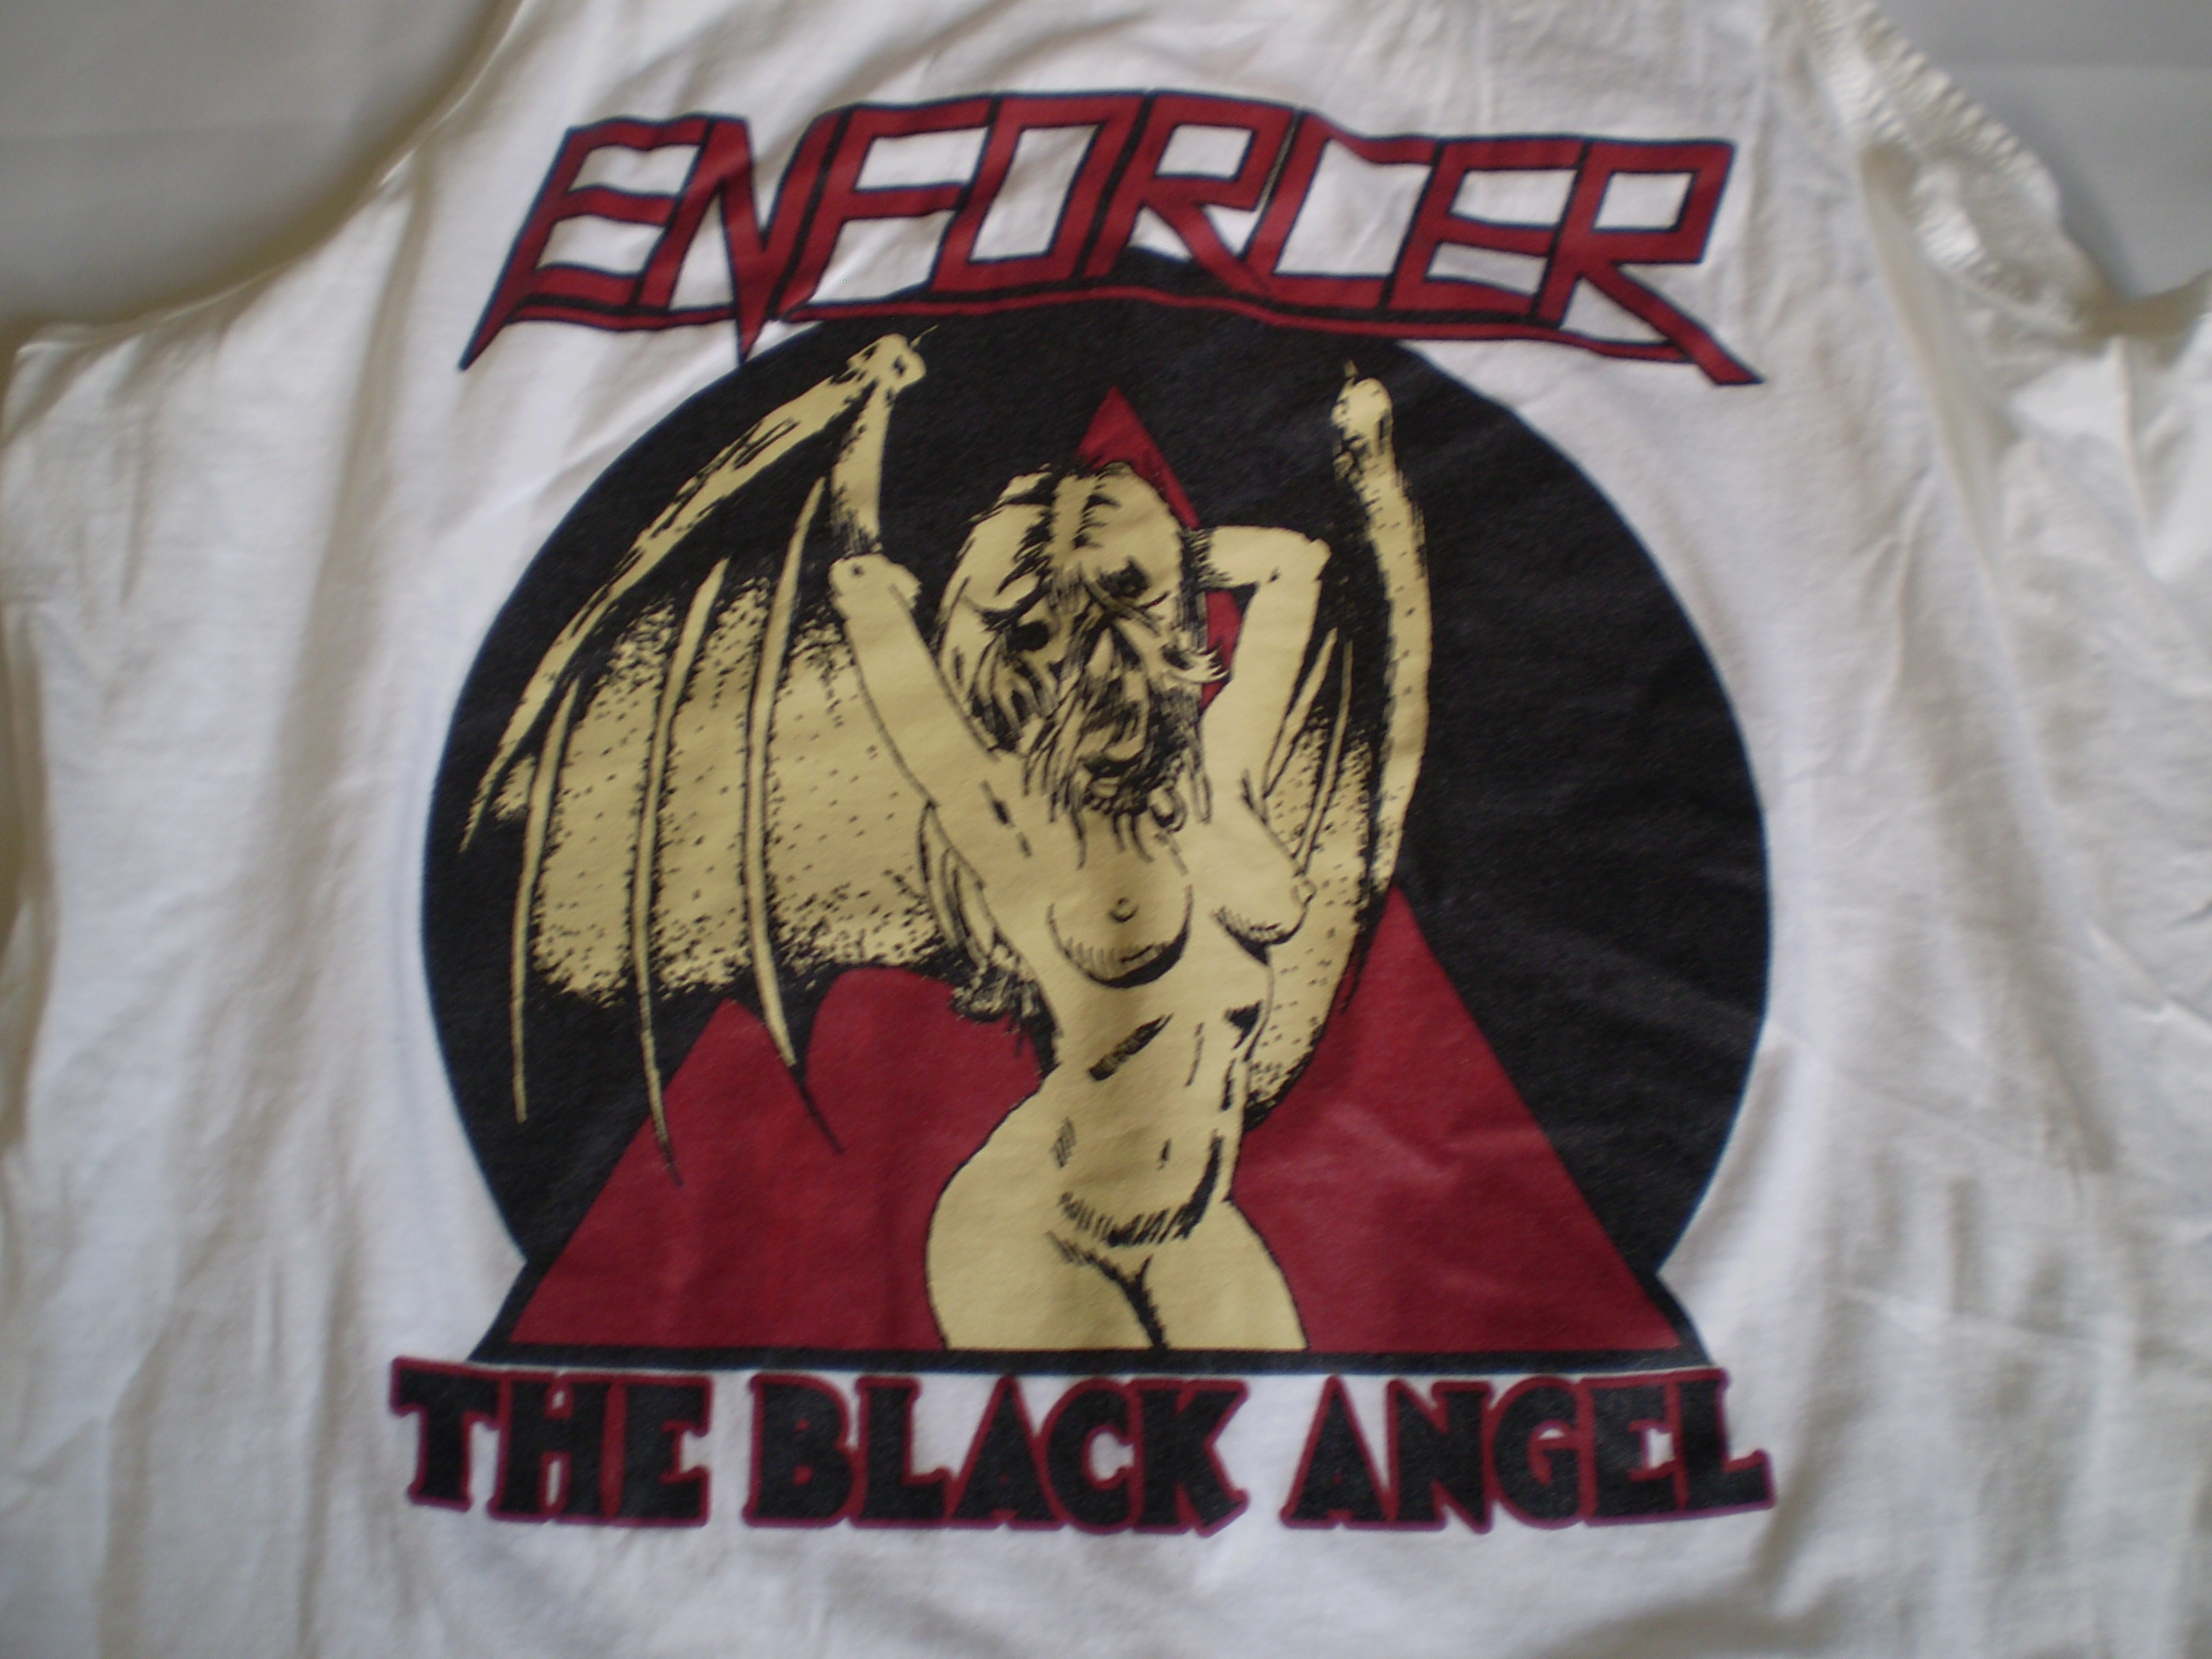 Enforcer - The Black Angel Man Tank